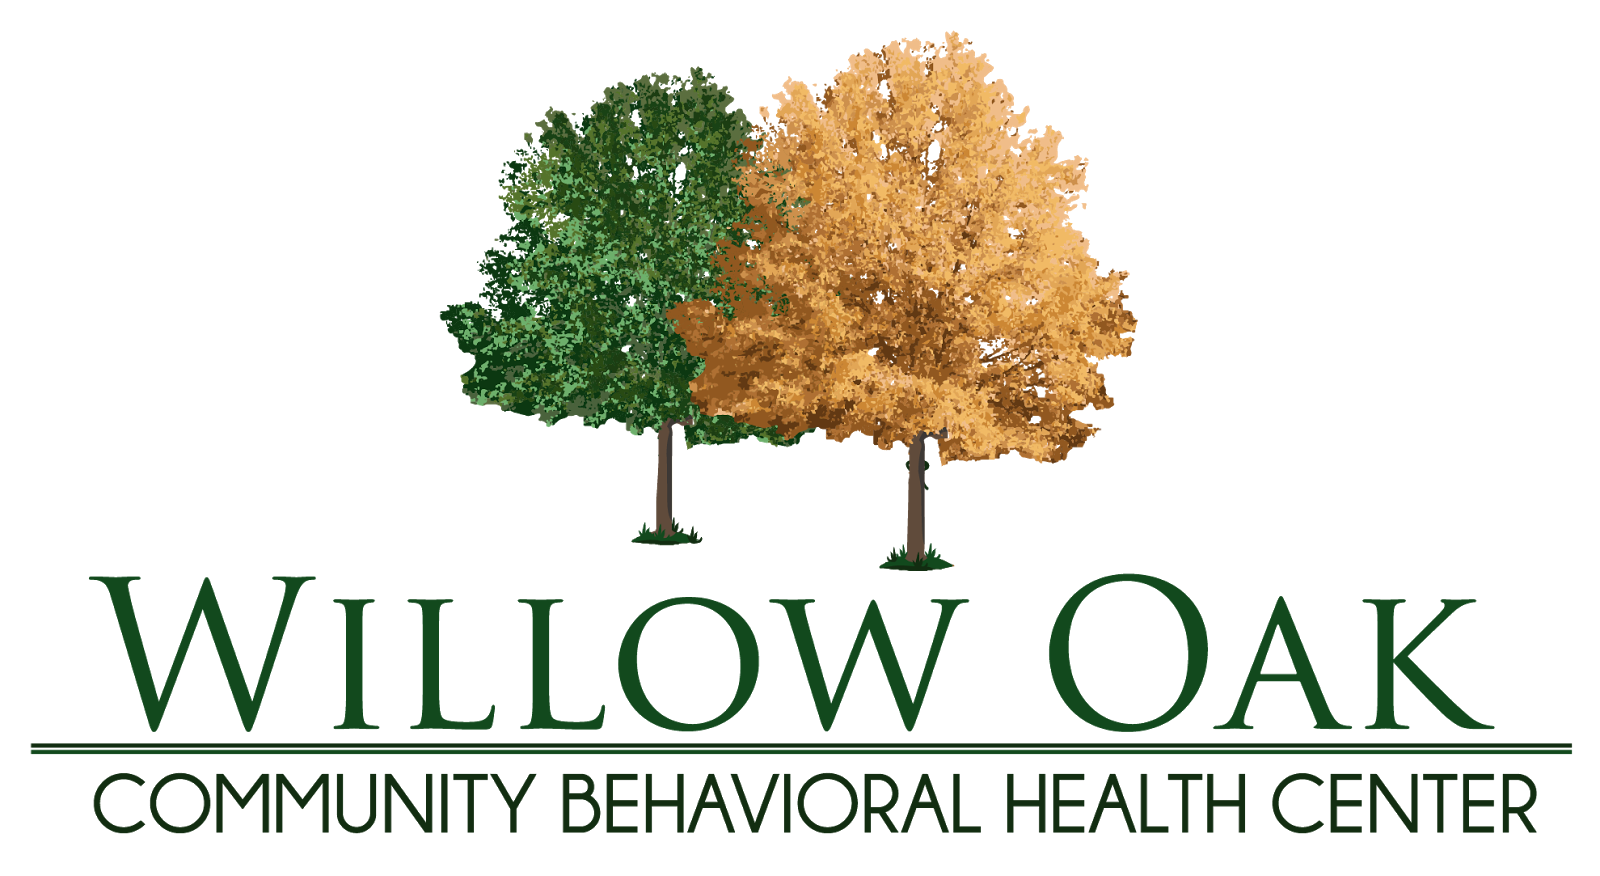 Willow Oak Community Behavioral Health Center